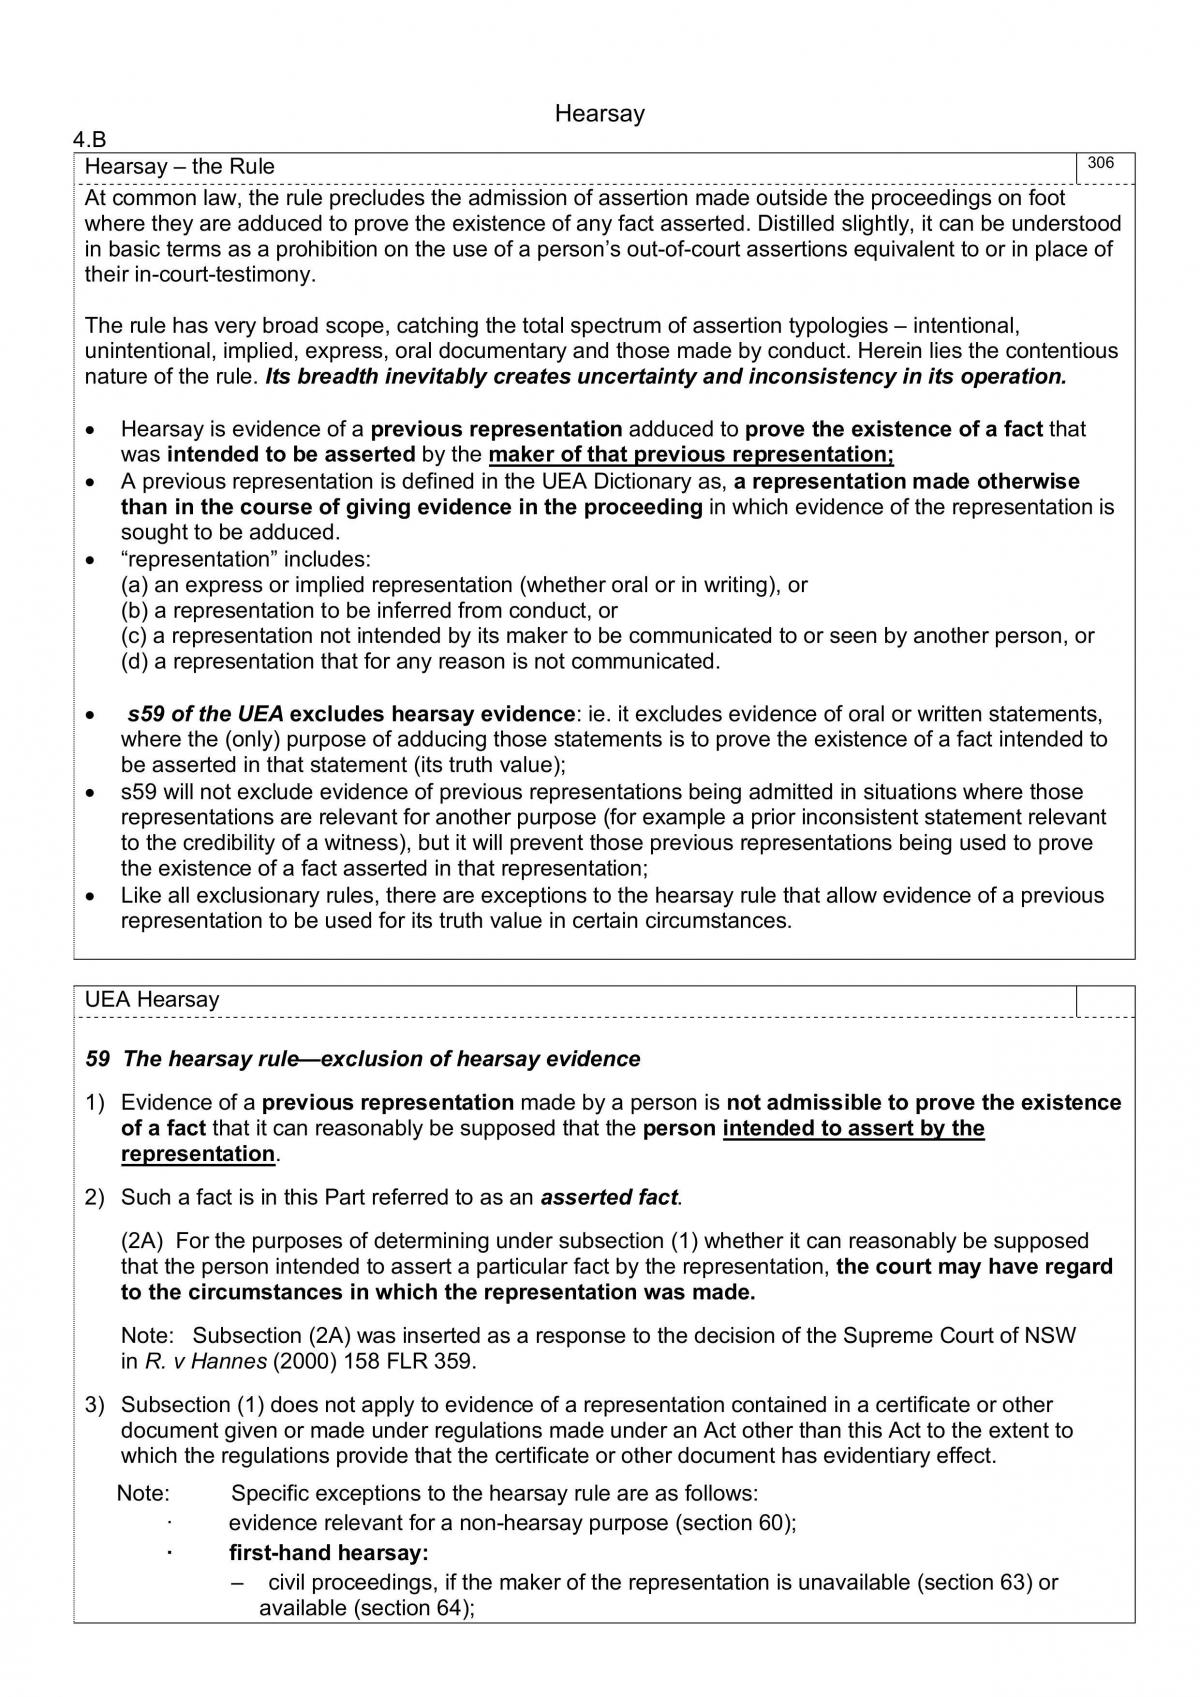 Hearsay Exam Notes - Page 1